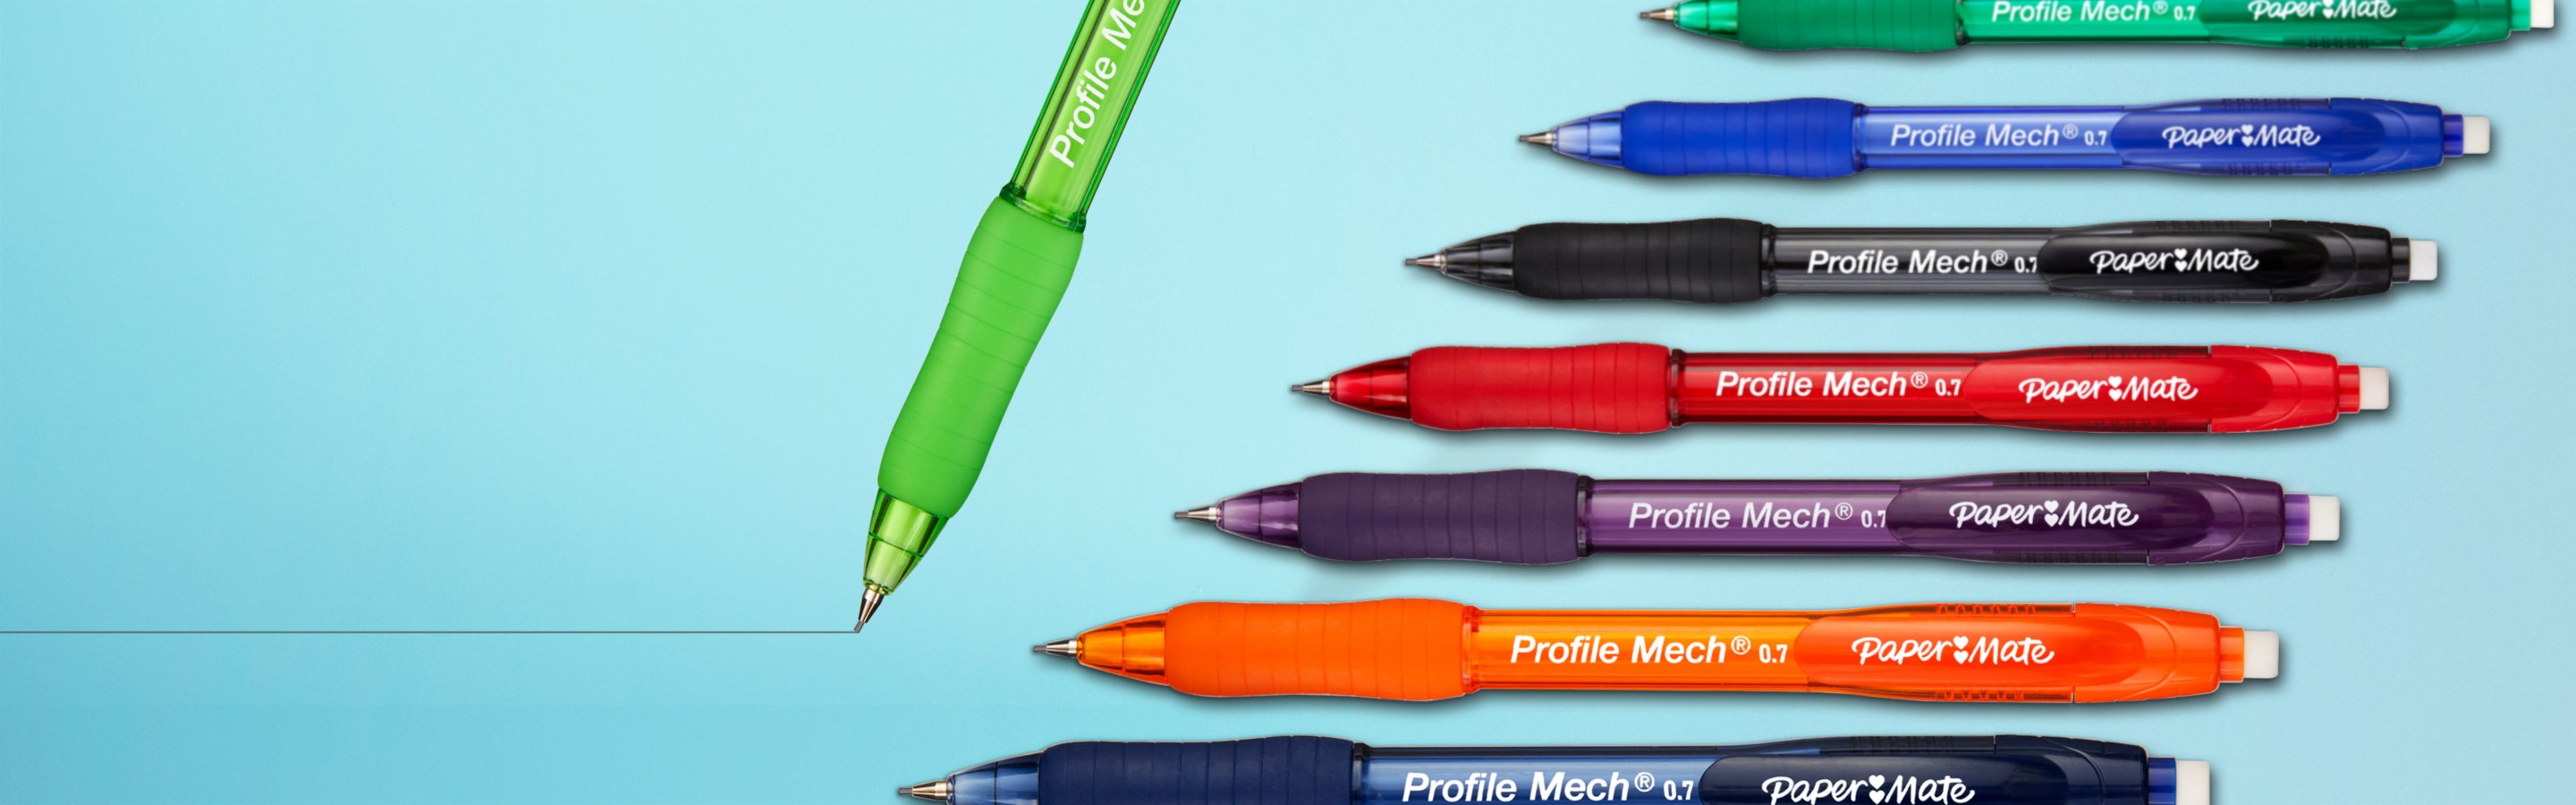 Pencil Eraser Click Eraser Refill Retractable Pen Mechanical Eraser Art Eraser for School Office Painting Writing Include 6 Colorful Pen and 30 Eraser Pen Refills 36 Pieces Eraser Pen Clear Color 